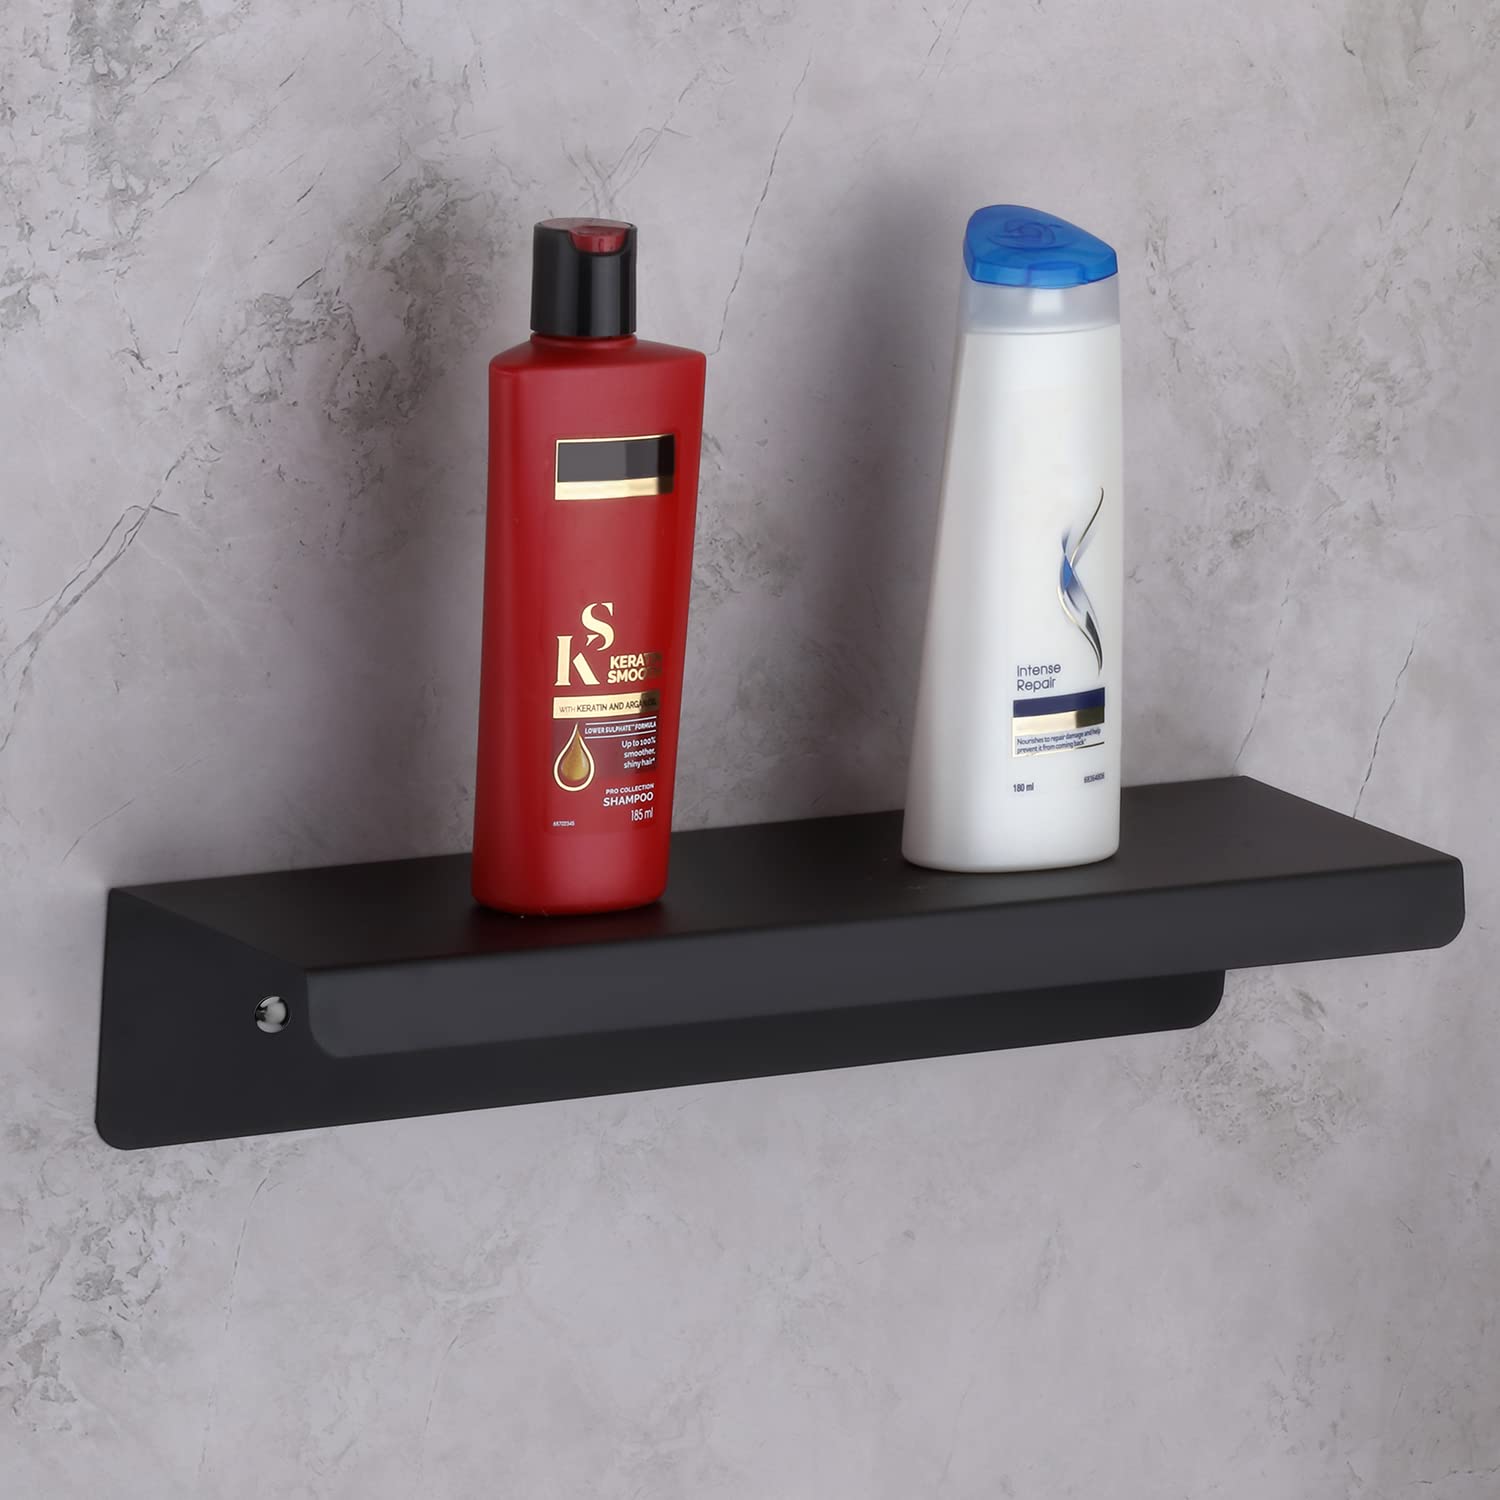 Plantex Stainless Steel Bathroom Shelf/Floating Shelf/Storage Organizer/Rack for Bathroom/Kitchen/Living-Room/Bathroom Accessories - Wall Mount (Matt Black - 14x5 inche)